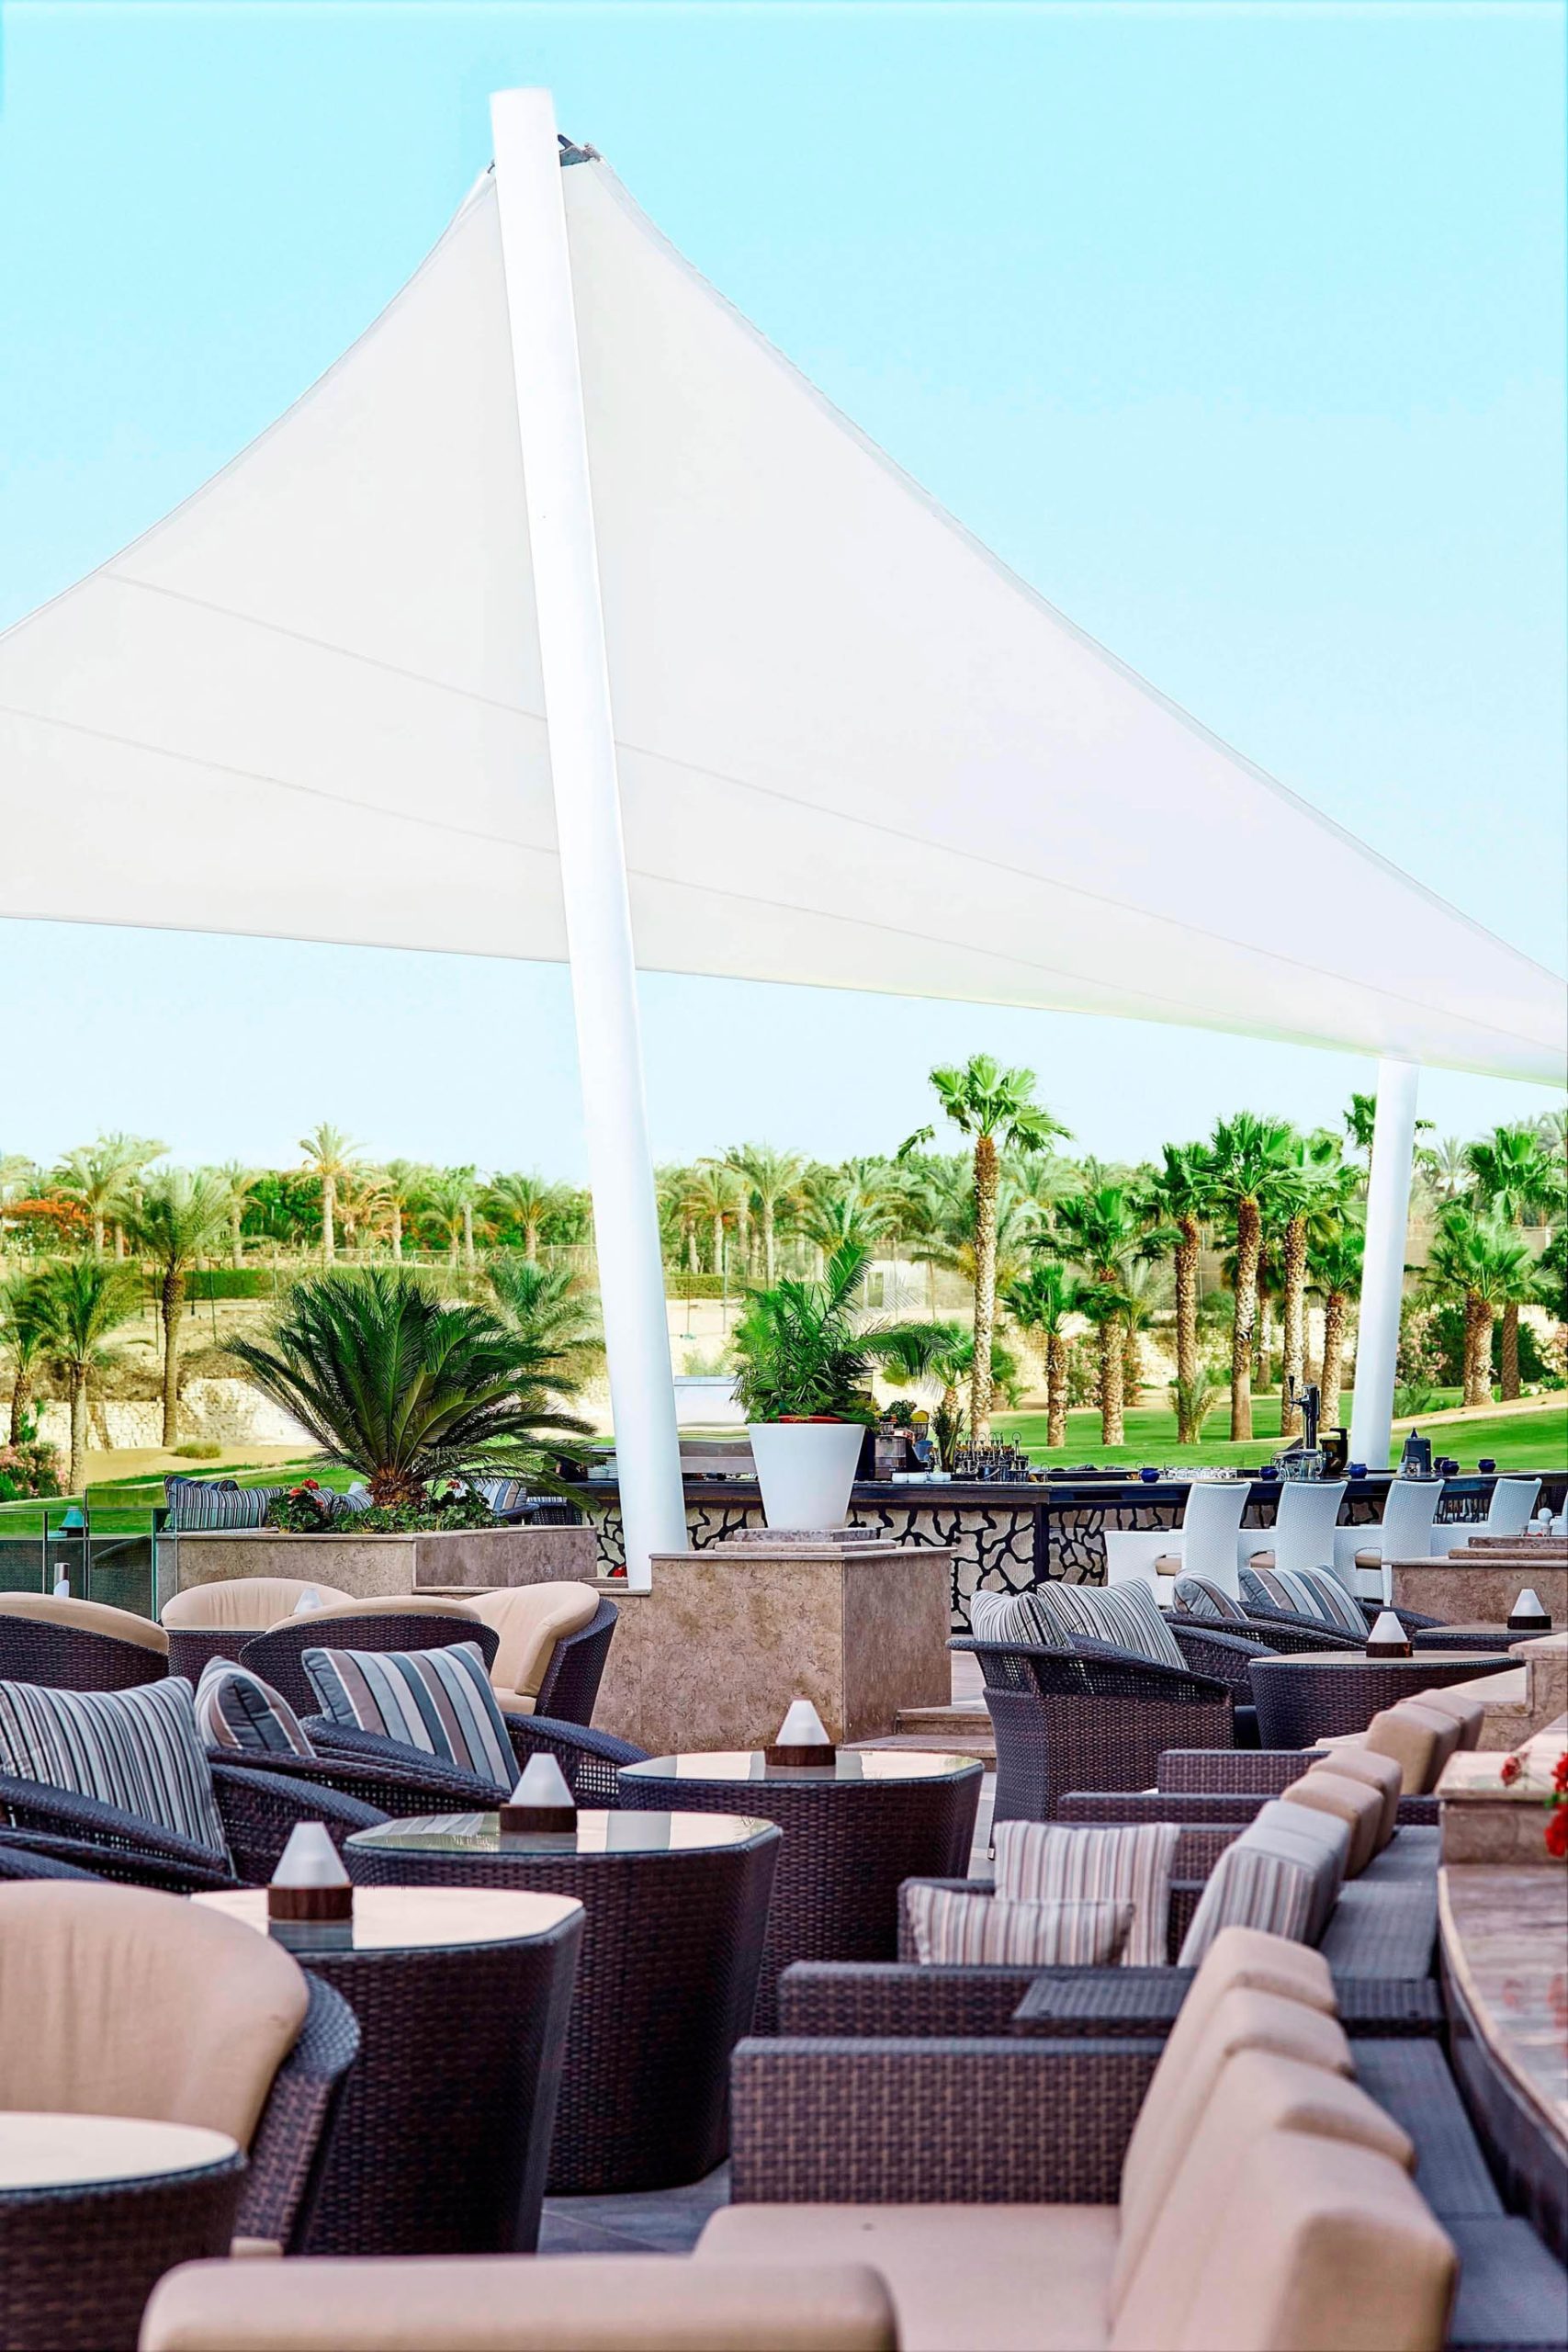 JW Marriott Hotel Cairo – Cairo, Egypt – Plateau Lounge Seating